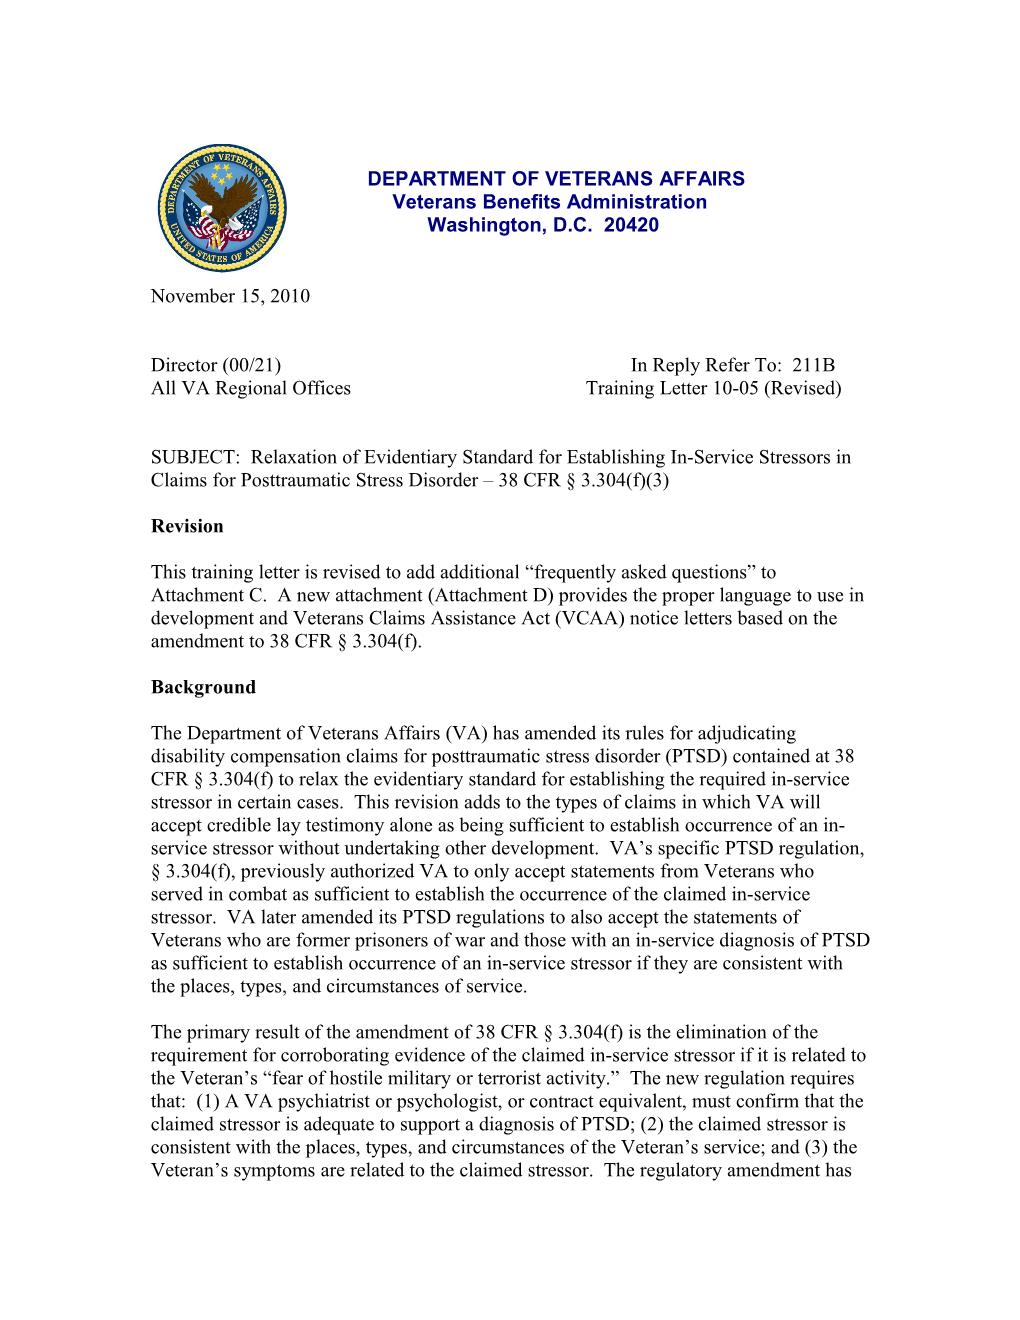 All VA Regional Offices Training Letter 10-05 (Revised)